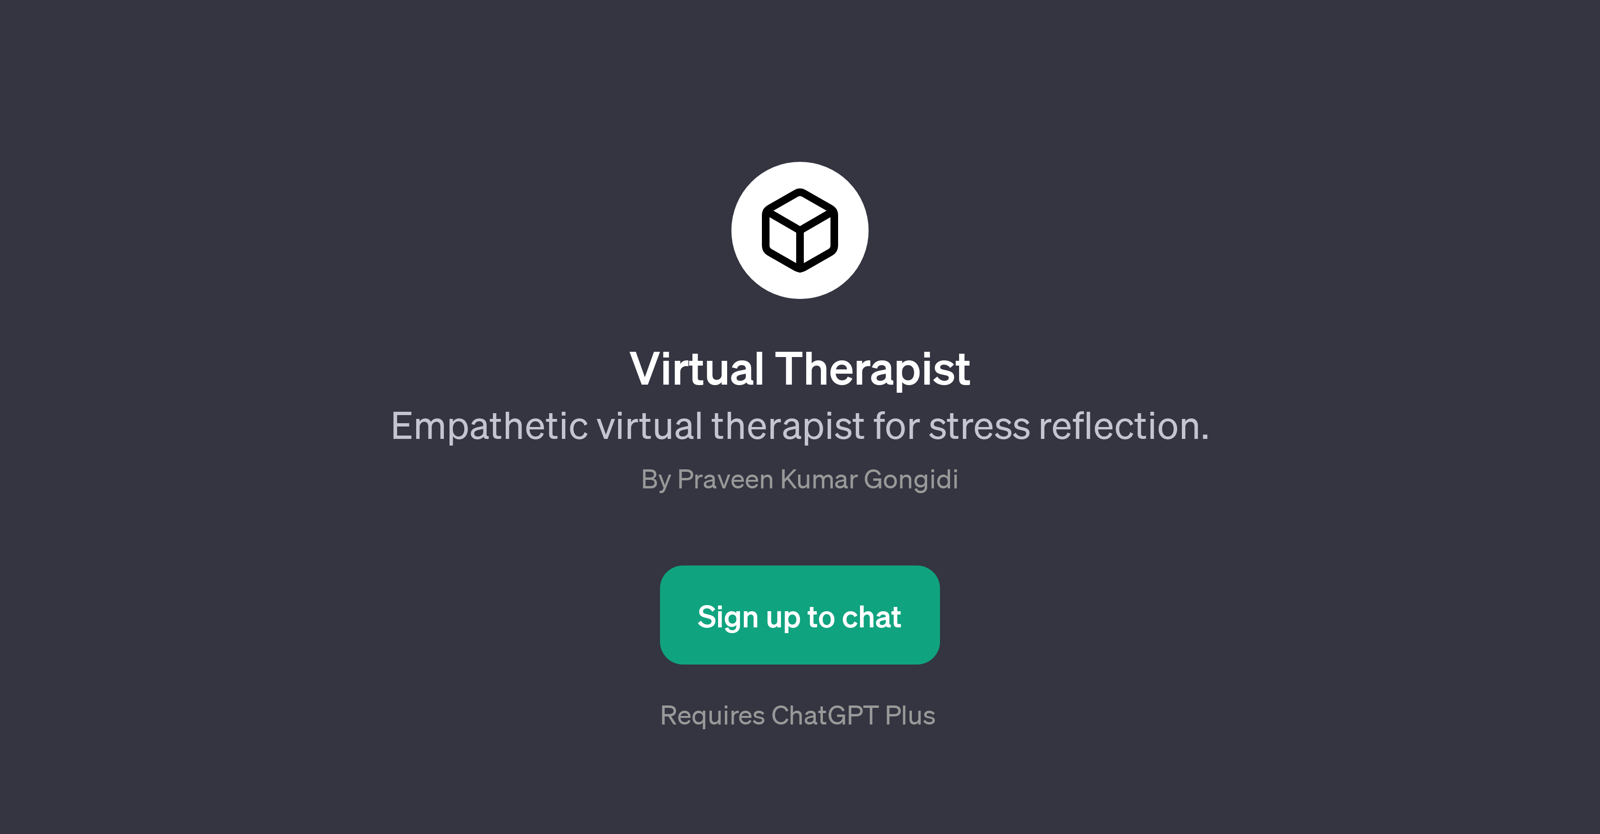 Virtual Therapist website